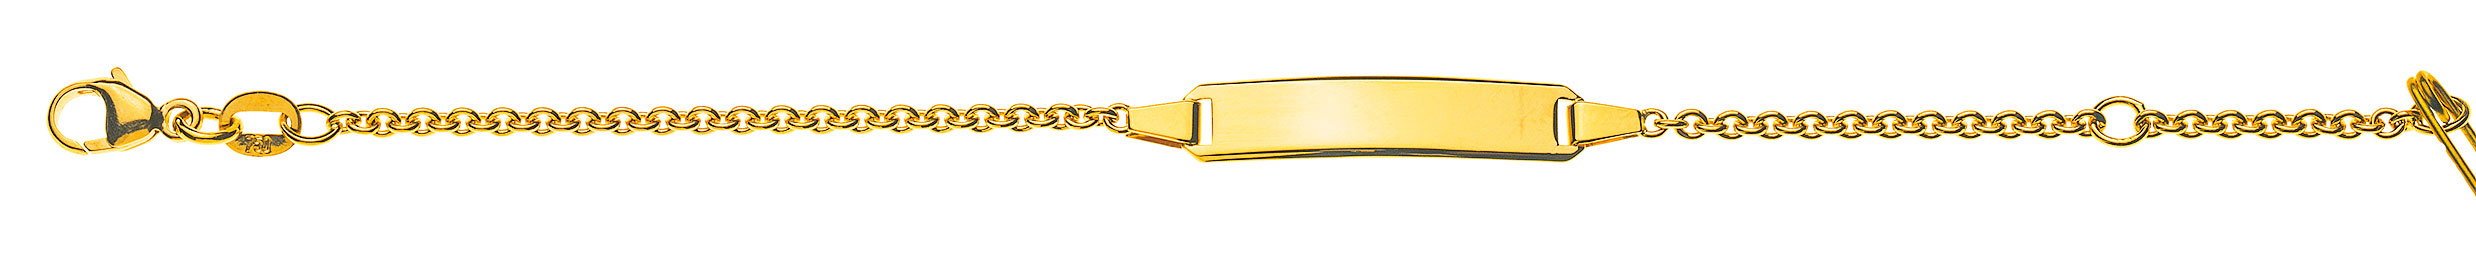 AURONOS Prestige ID bracelet 18k yellow gold round anchor chain 14cm